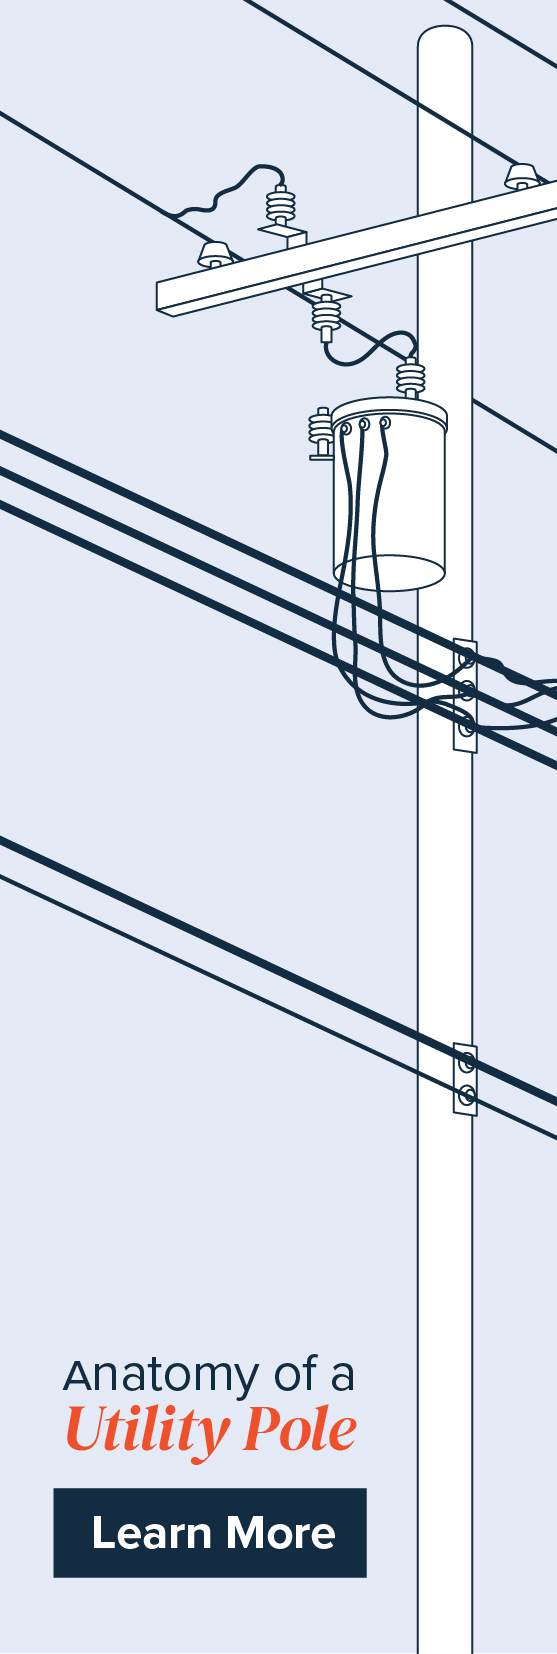 Anatomy of a Utility pole.